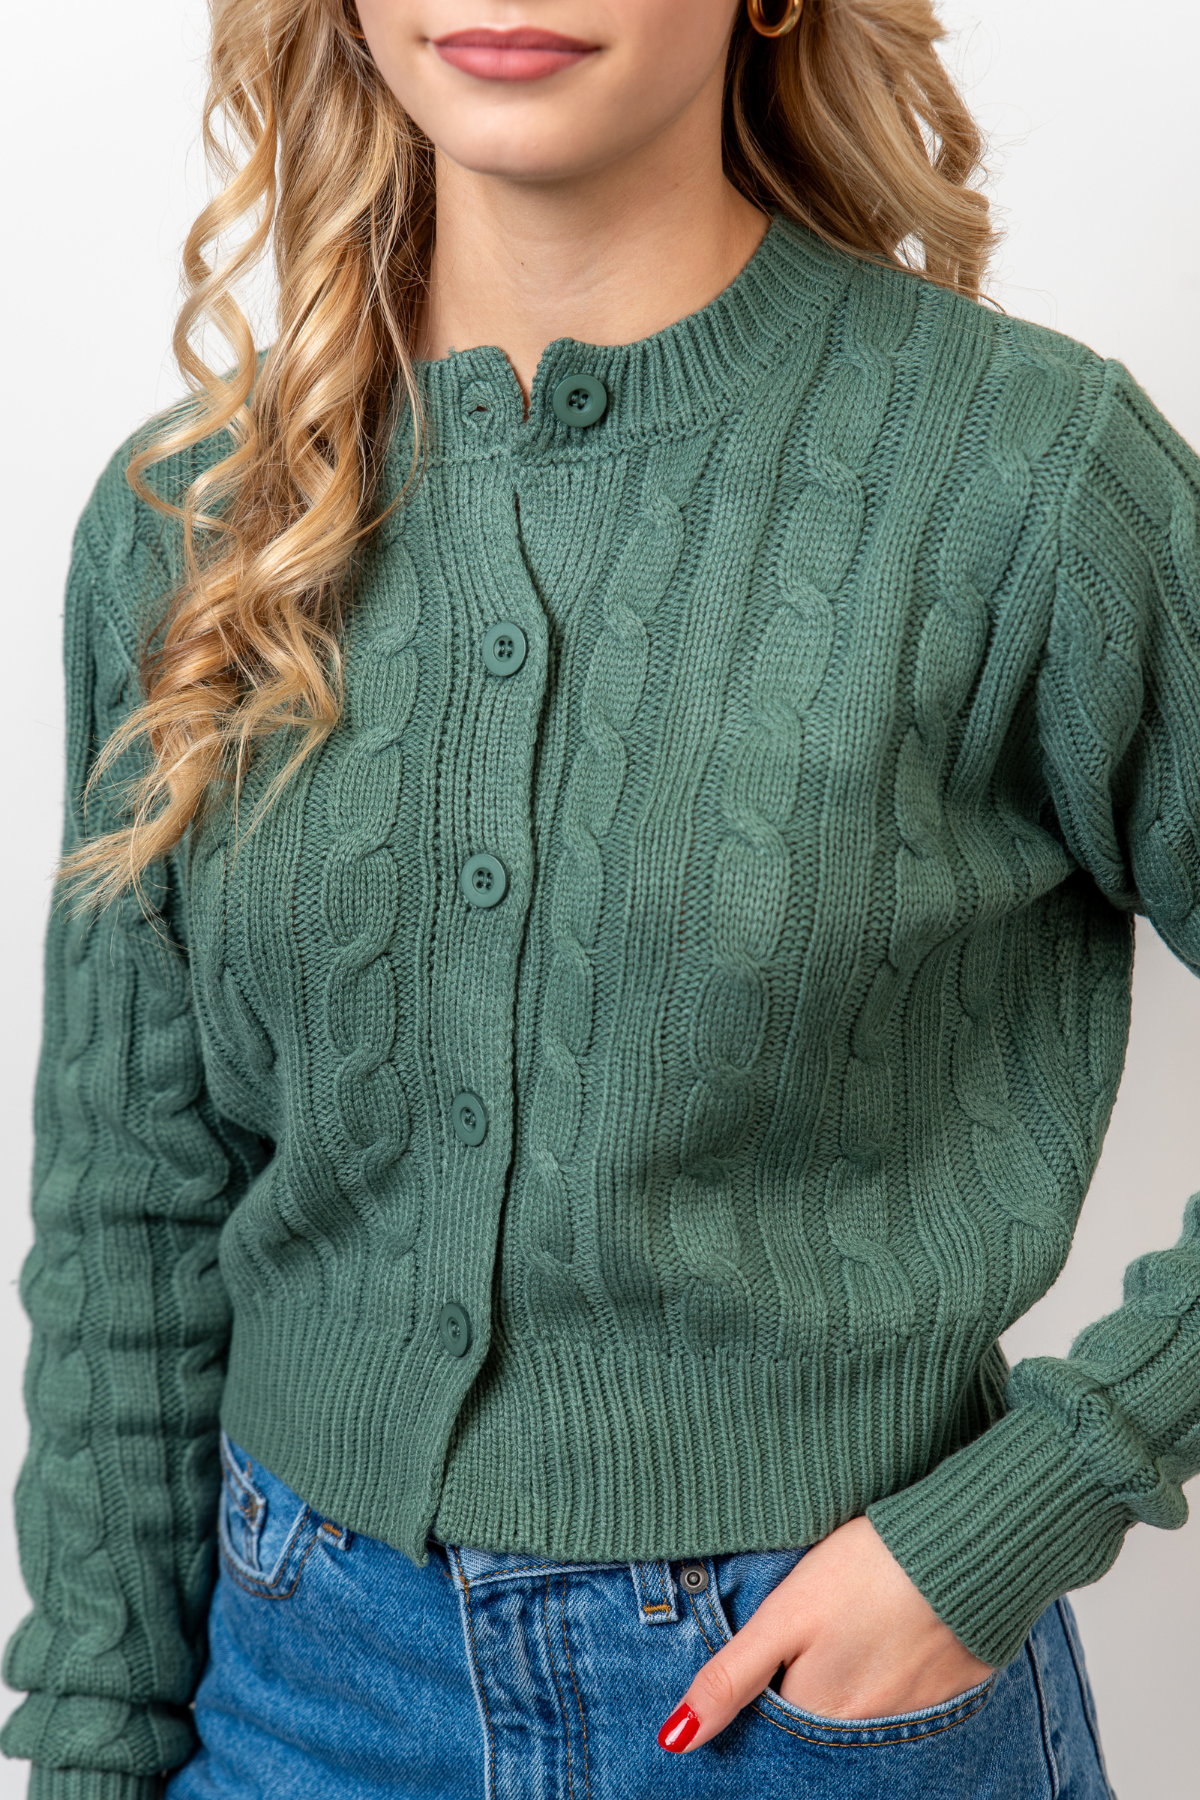 The Tatianna Sweater